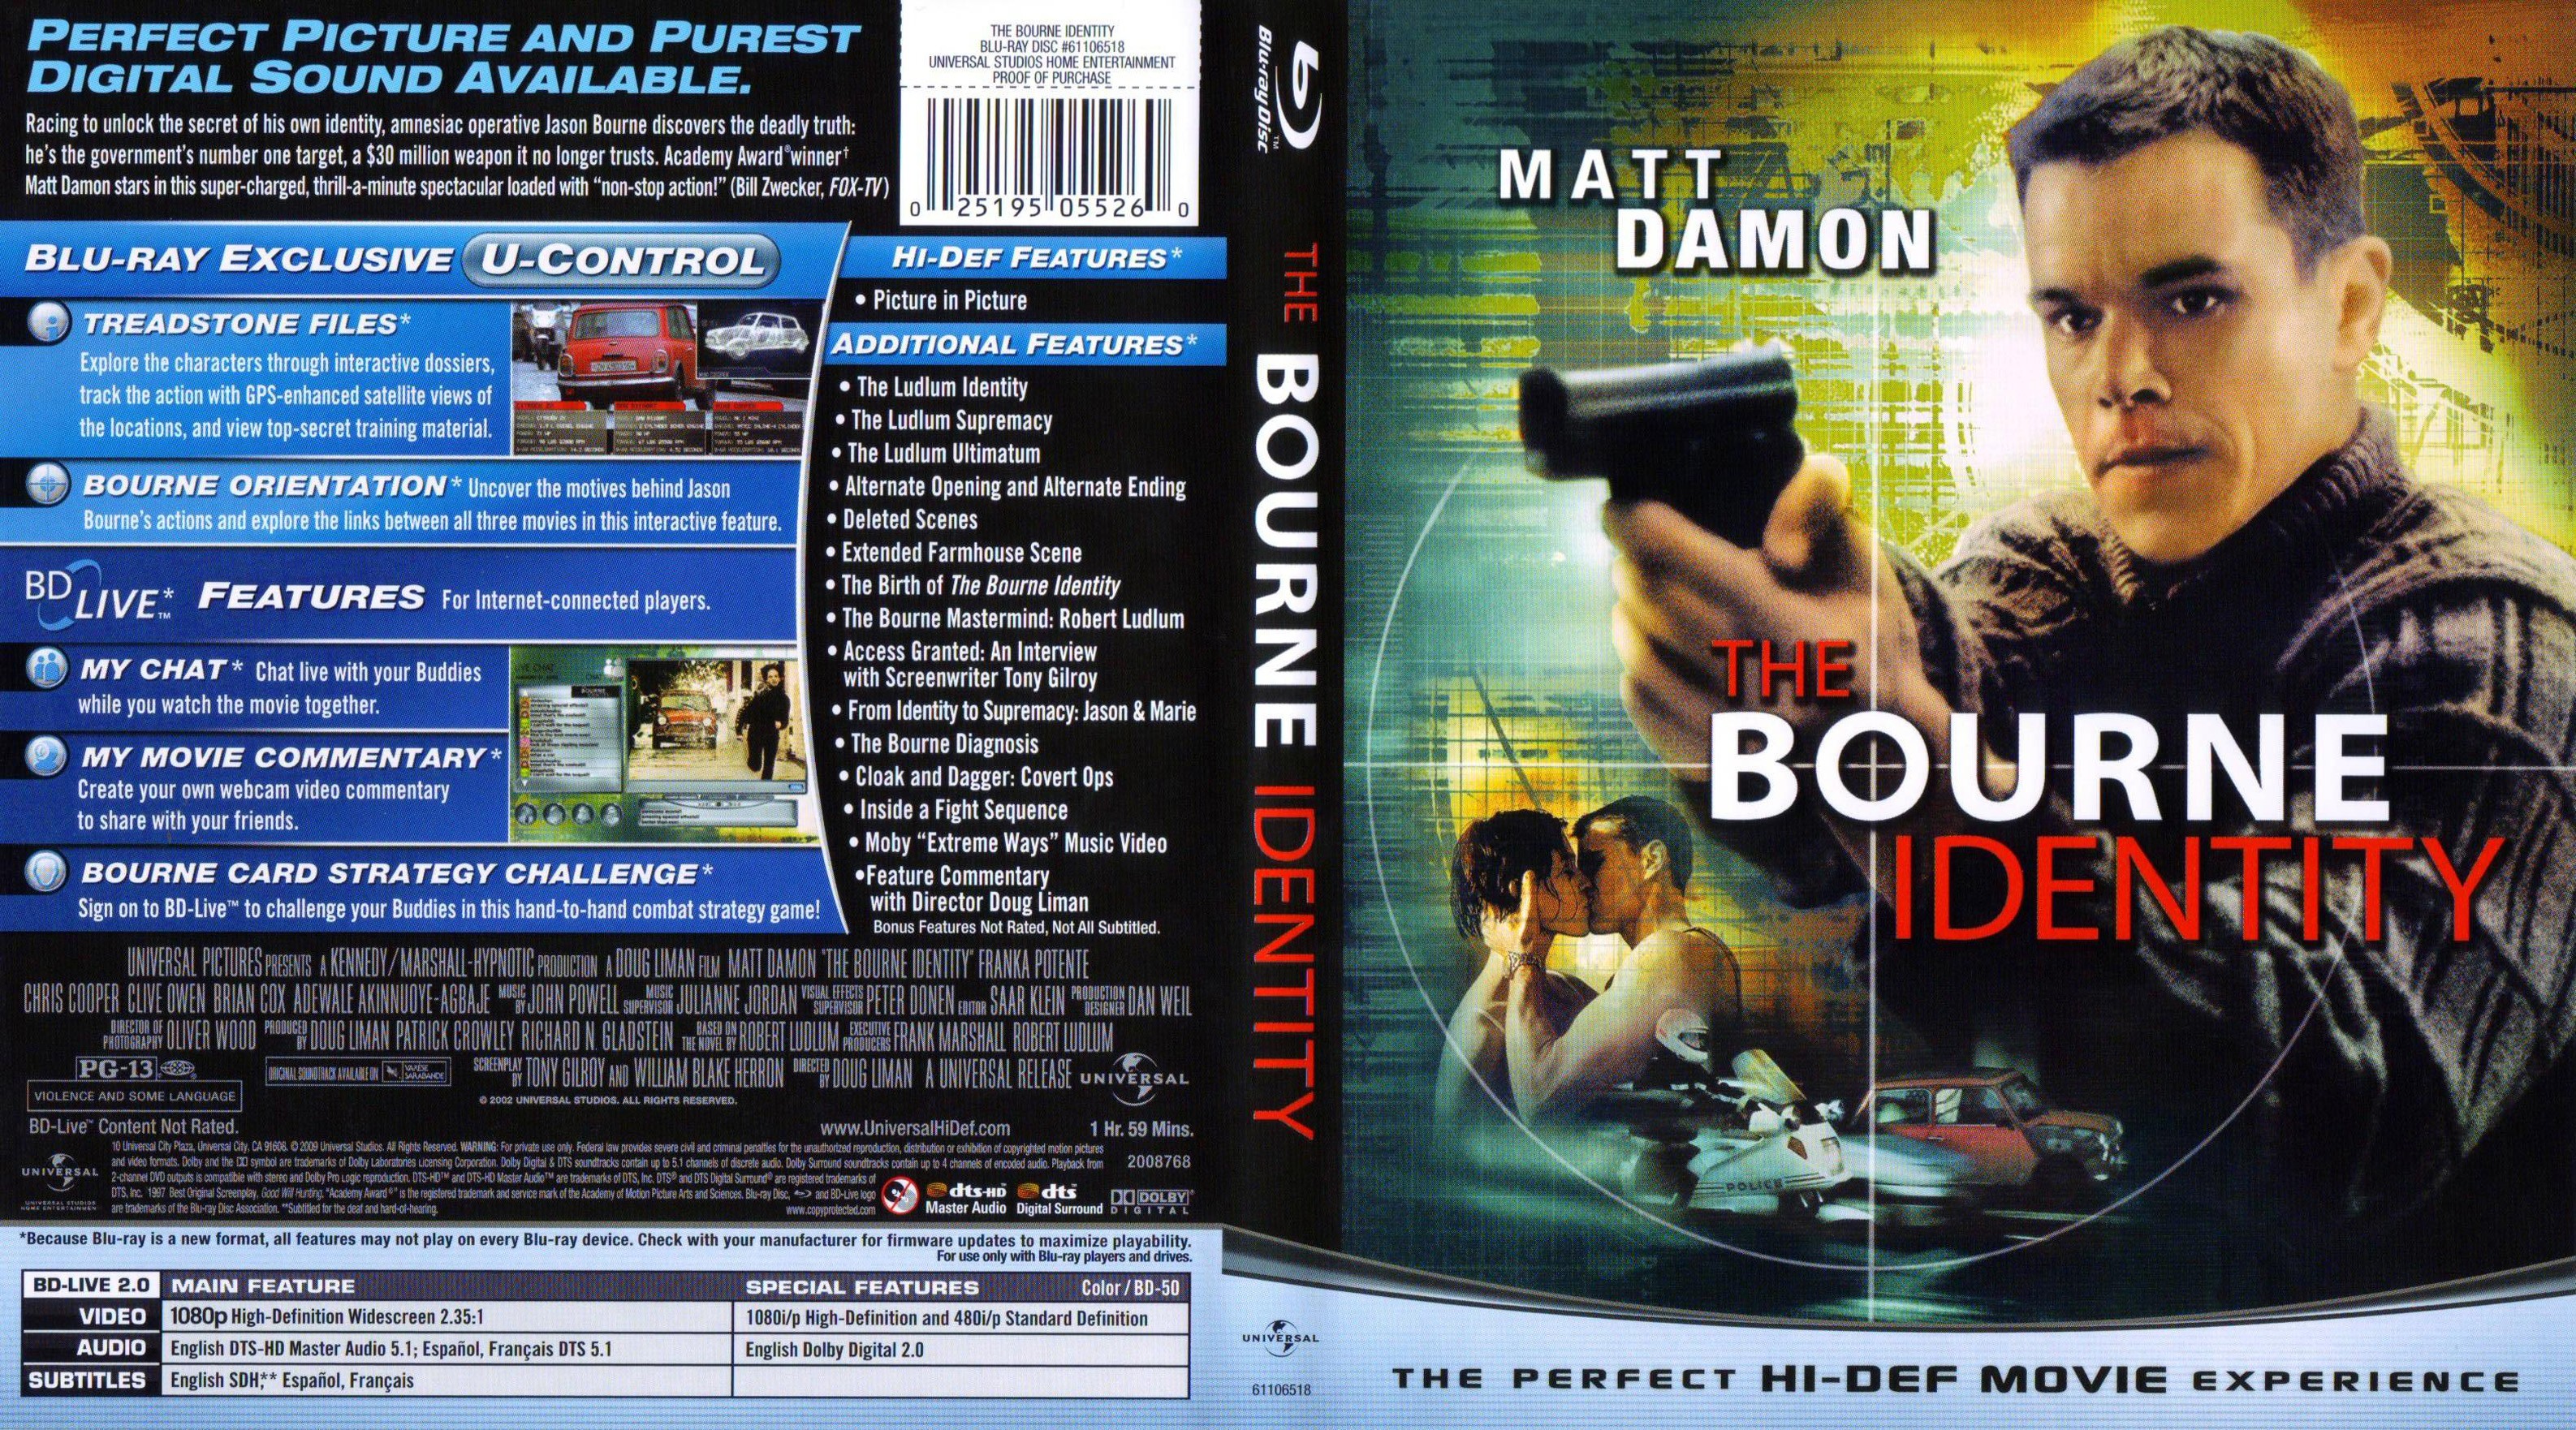 Jaquette DVD The bourne identity Zone 1 (BLU-RAY)